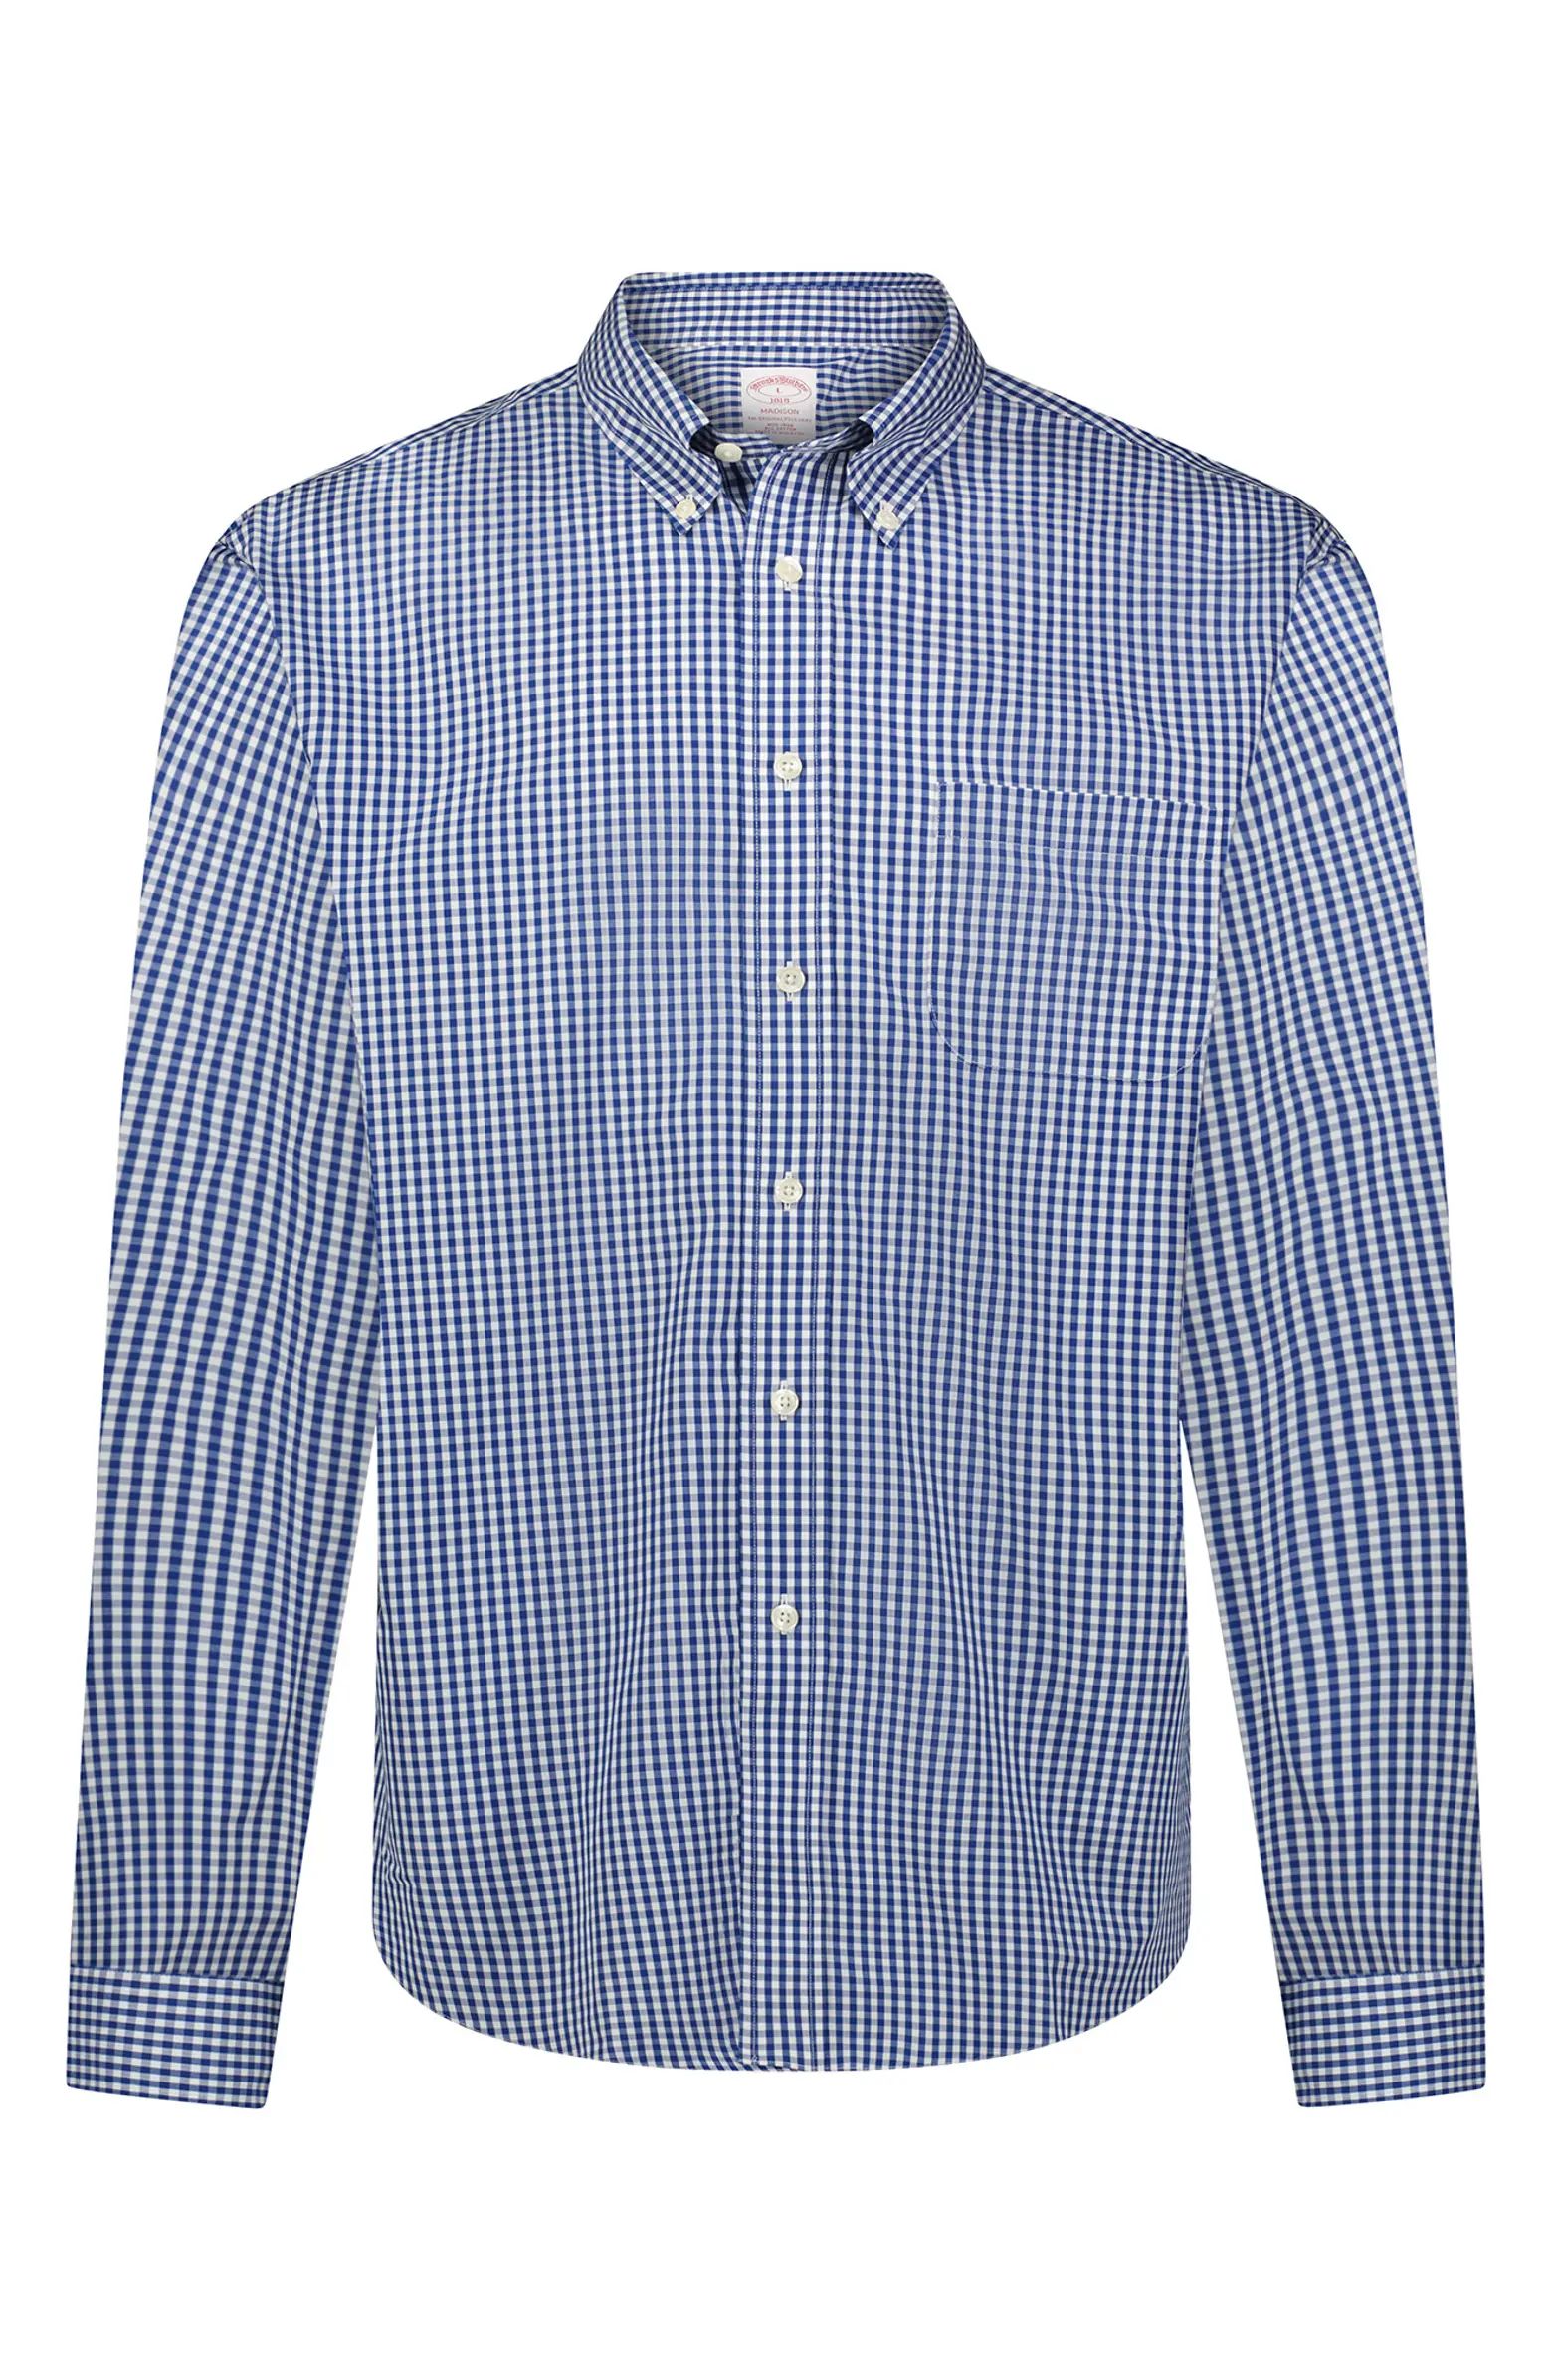 Gingham Print Cotton Button-Down Dress Shirt | Nordstrom Rack